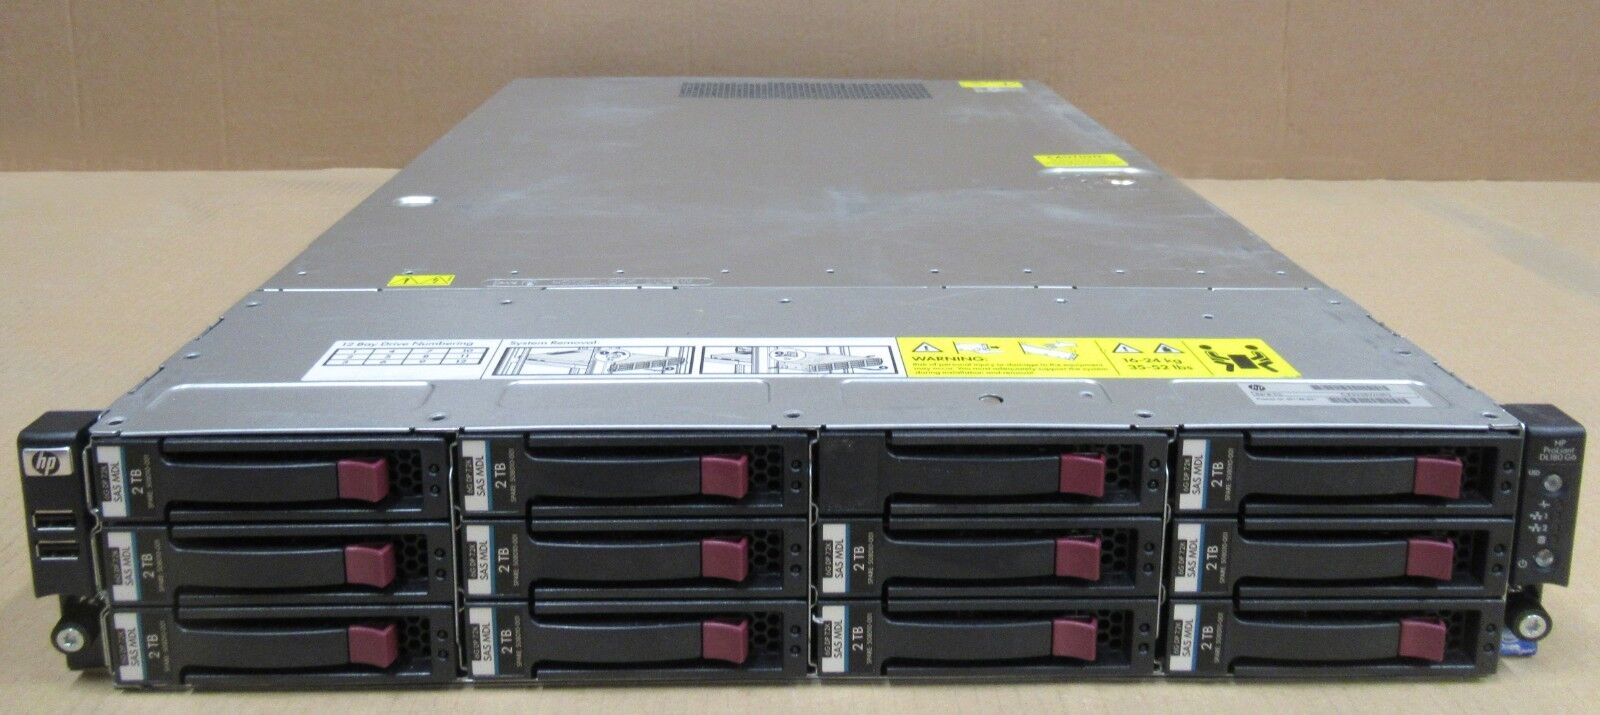 HP Proliant DL180 G6 E5620 Quad Core 2.4GHz 12GB 22TB 2U Rack Server 507168-B21